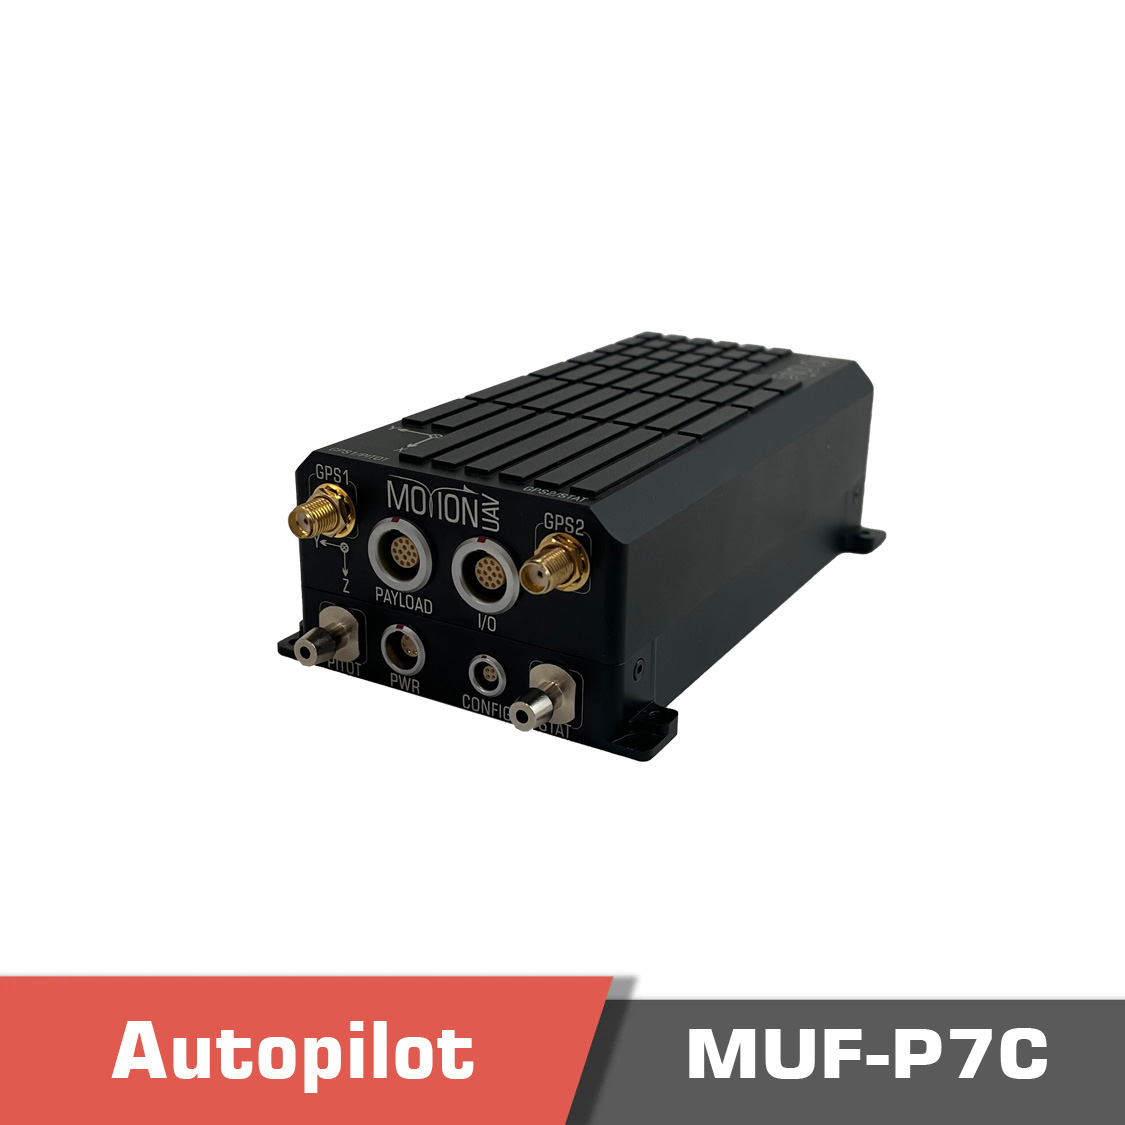 MUF P7C temp.real .2 - SpeedyBee F405 v3, SpeedyBee F405 V3 BLS 50A 30x30 Stack, Autopilot, ESC, F405, BEC, PWM control - MotioNew - 2